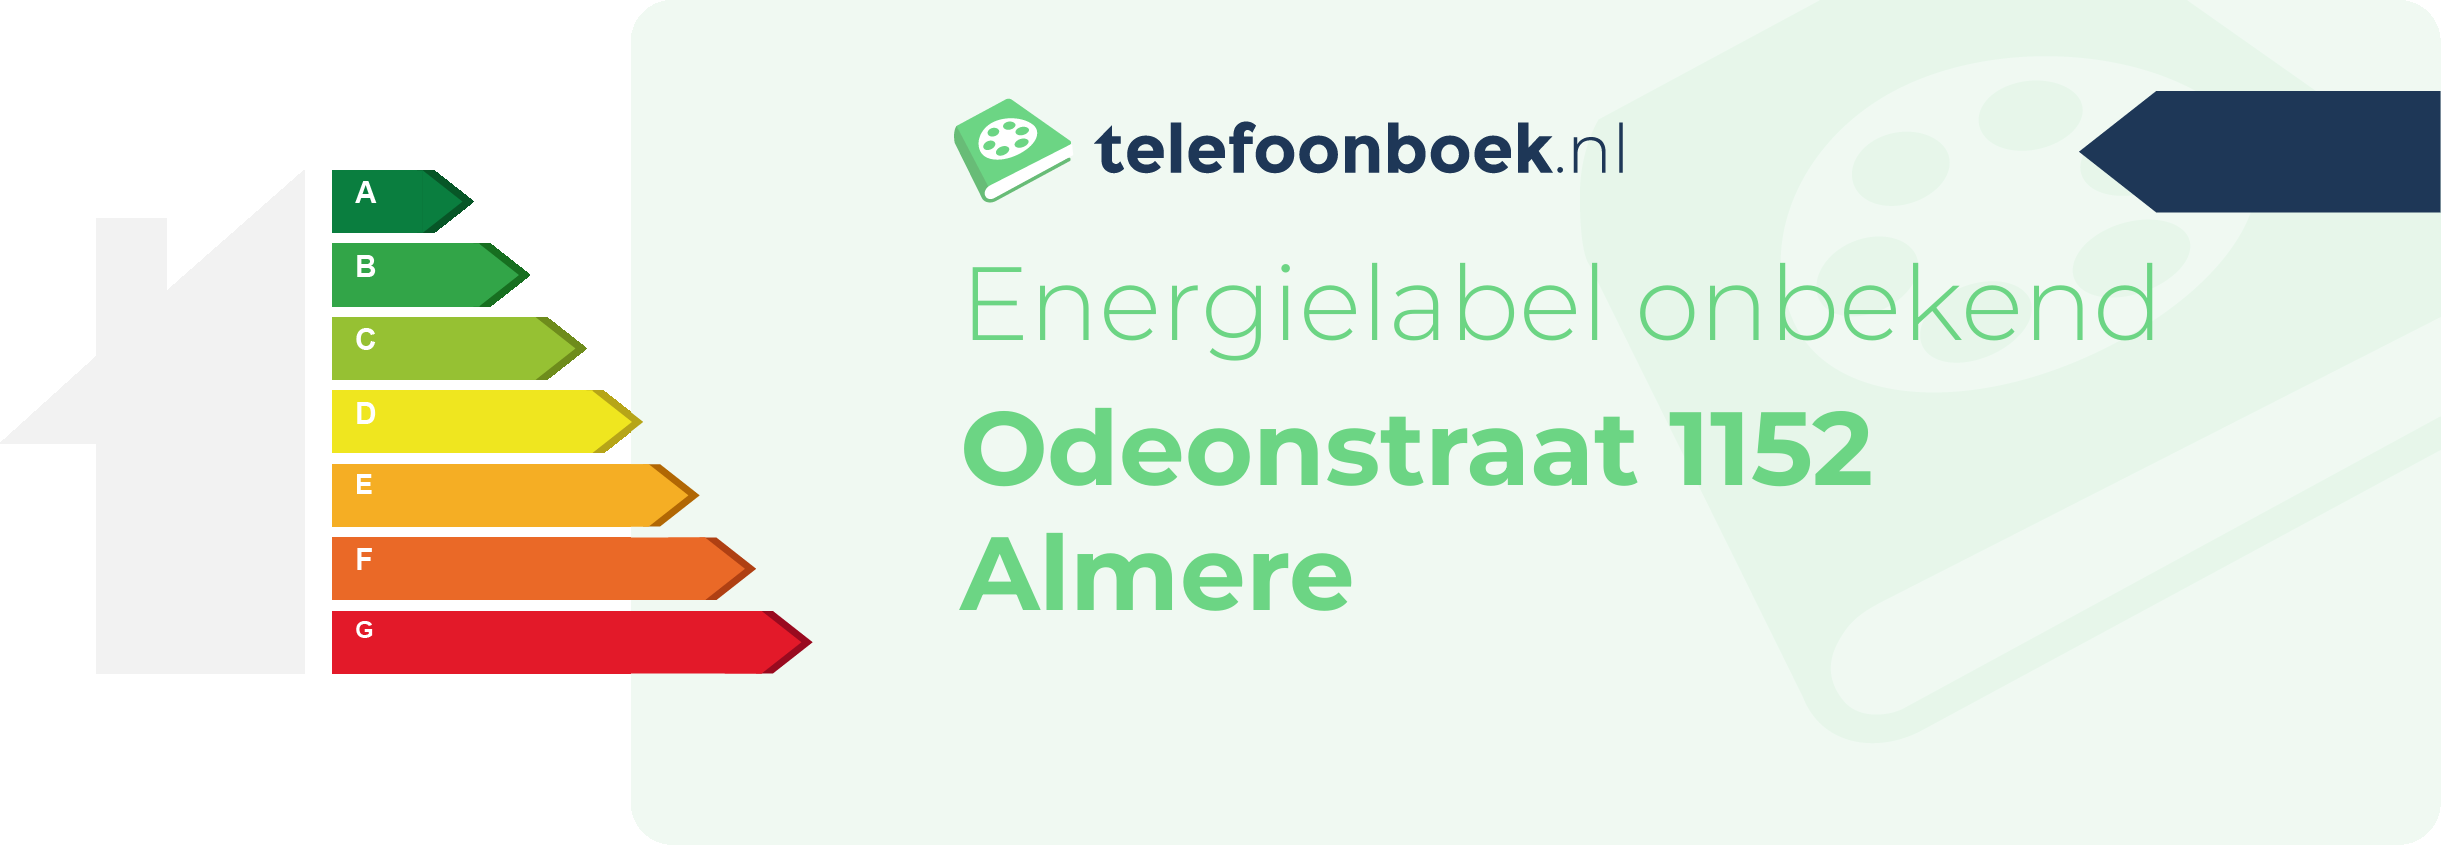 Energielabel Odeonstraat 1152 Almere